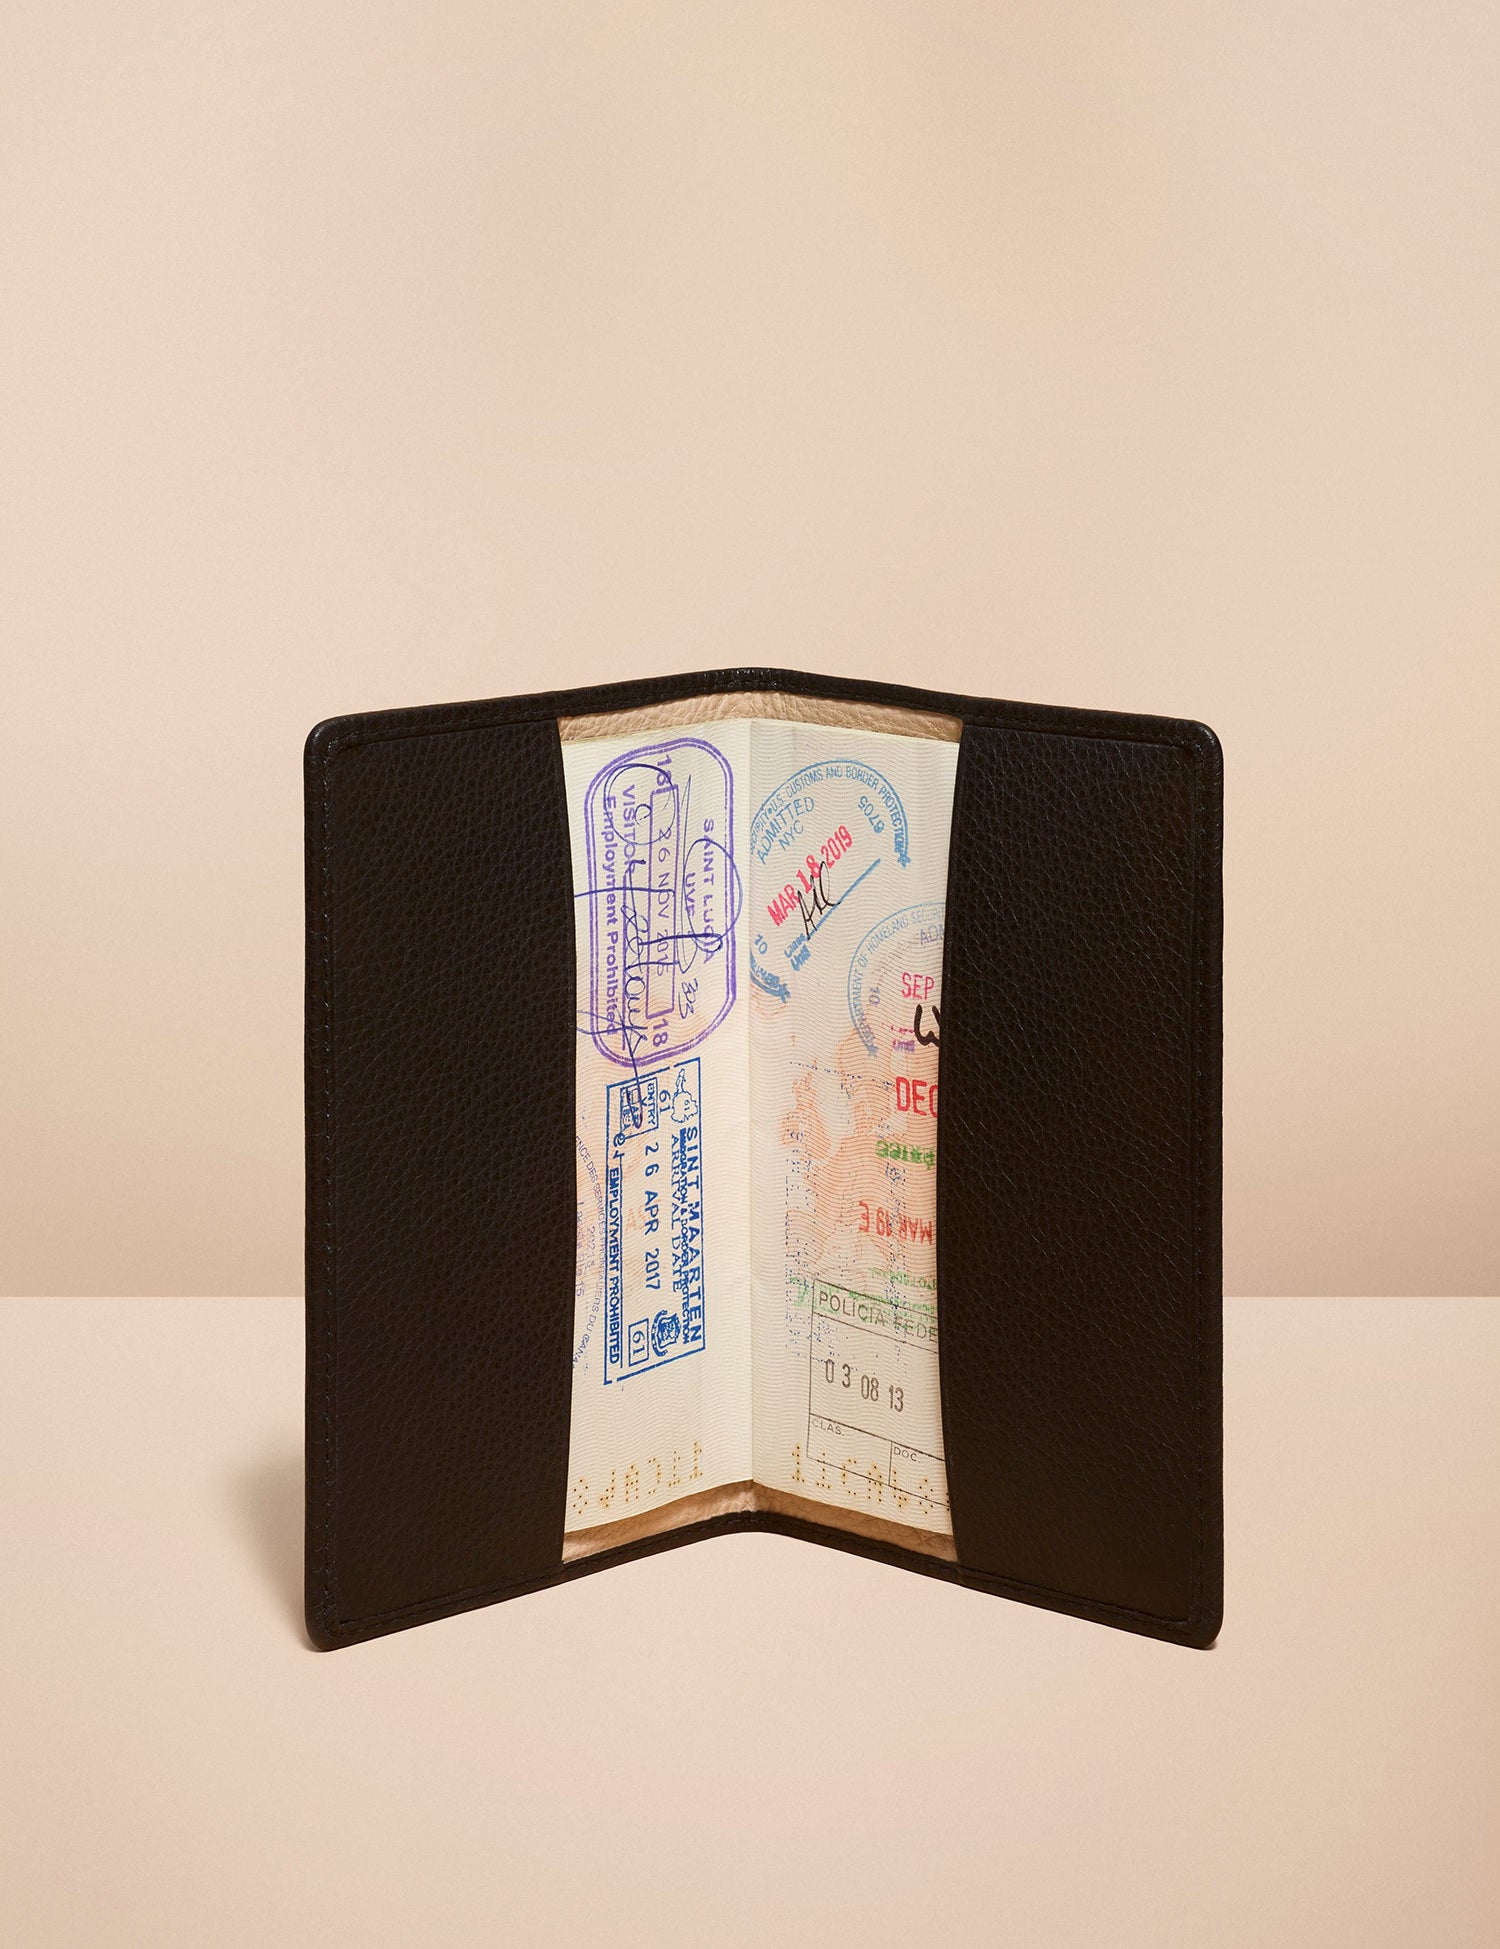 black leather passport holder